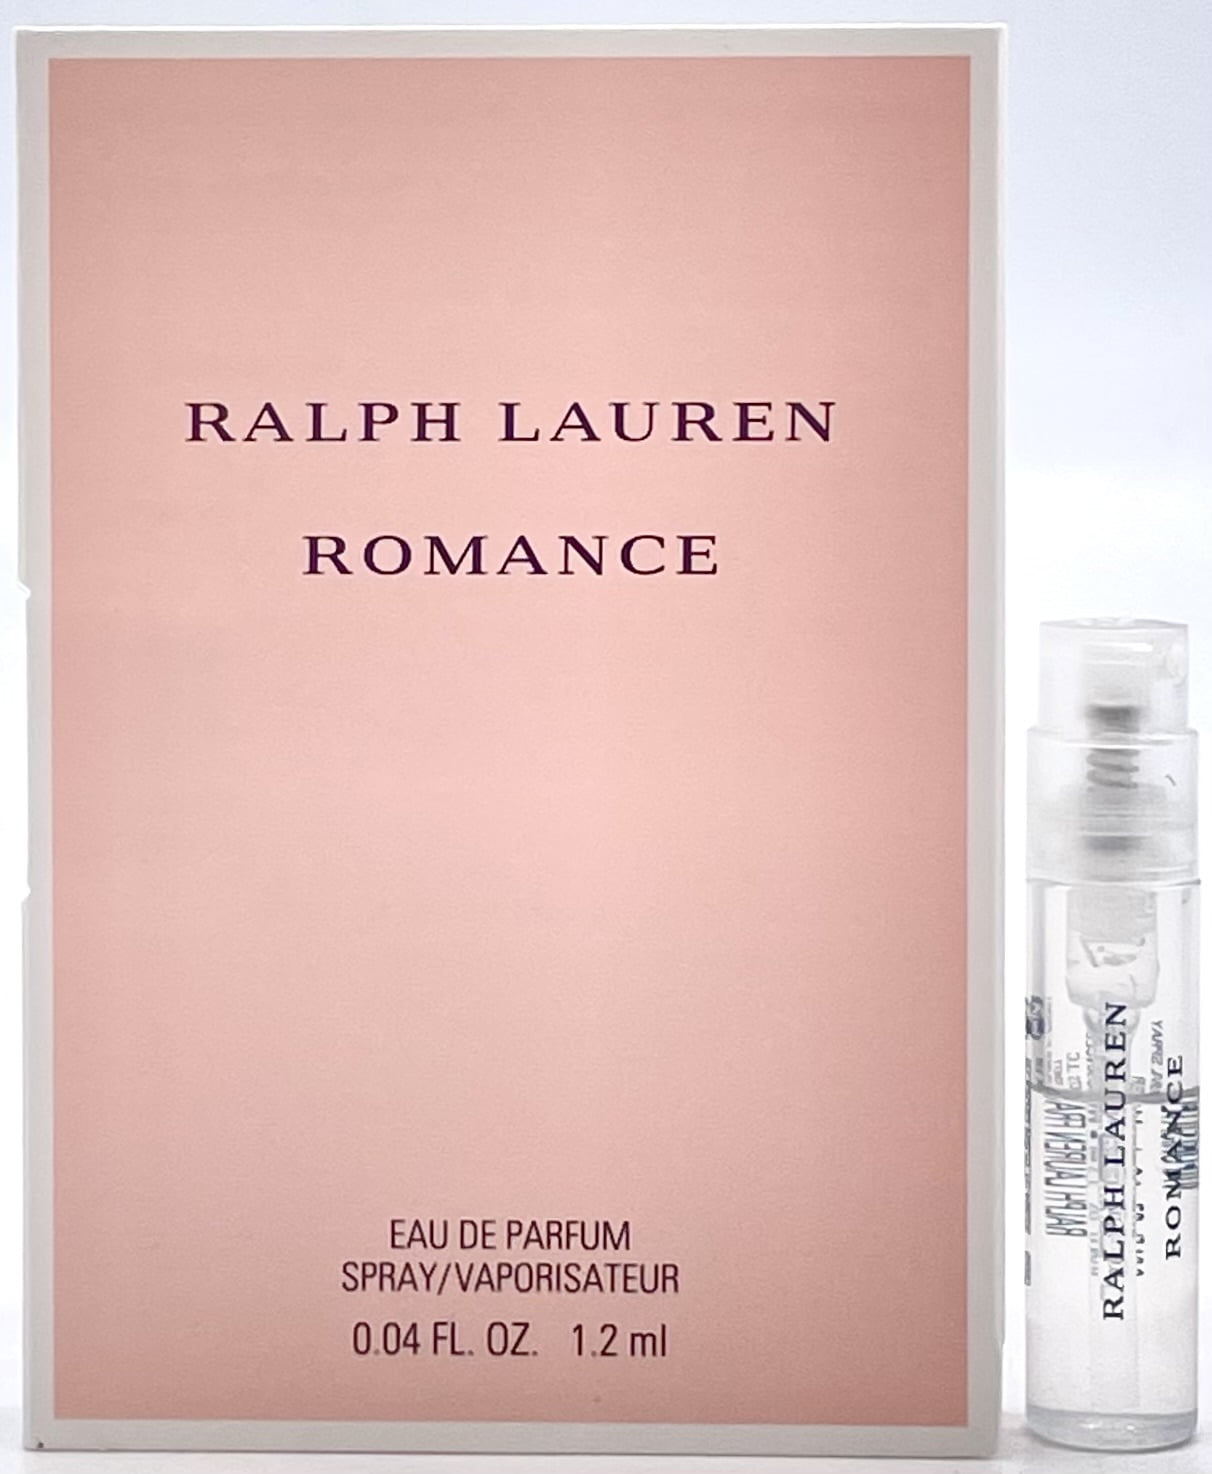 Romance by Ralph Lauren for Women 0.04 oz Eau de Parfum Vial Spray